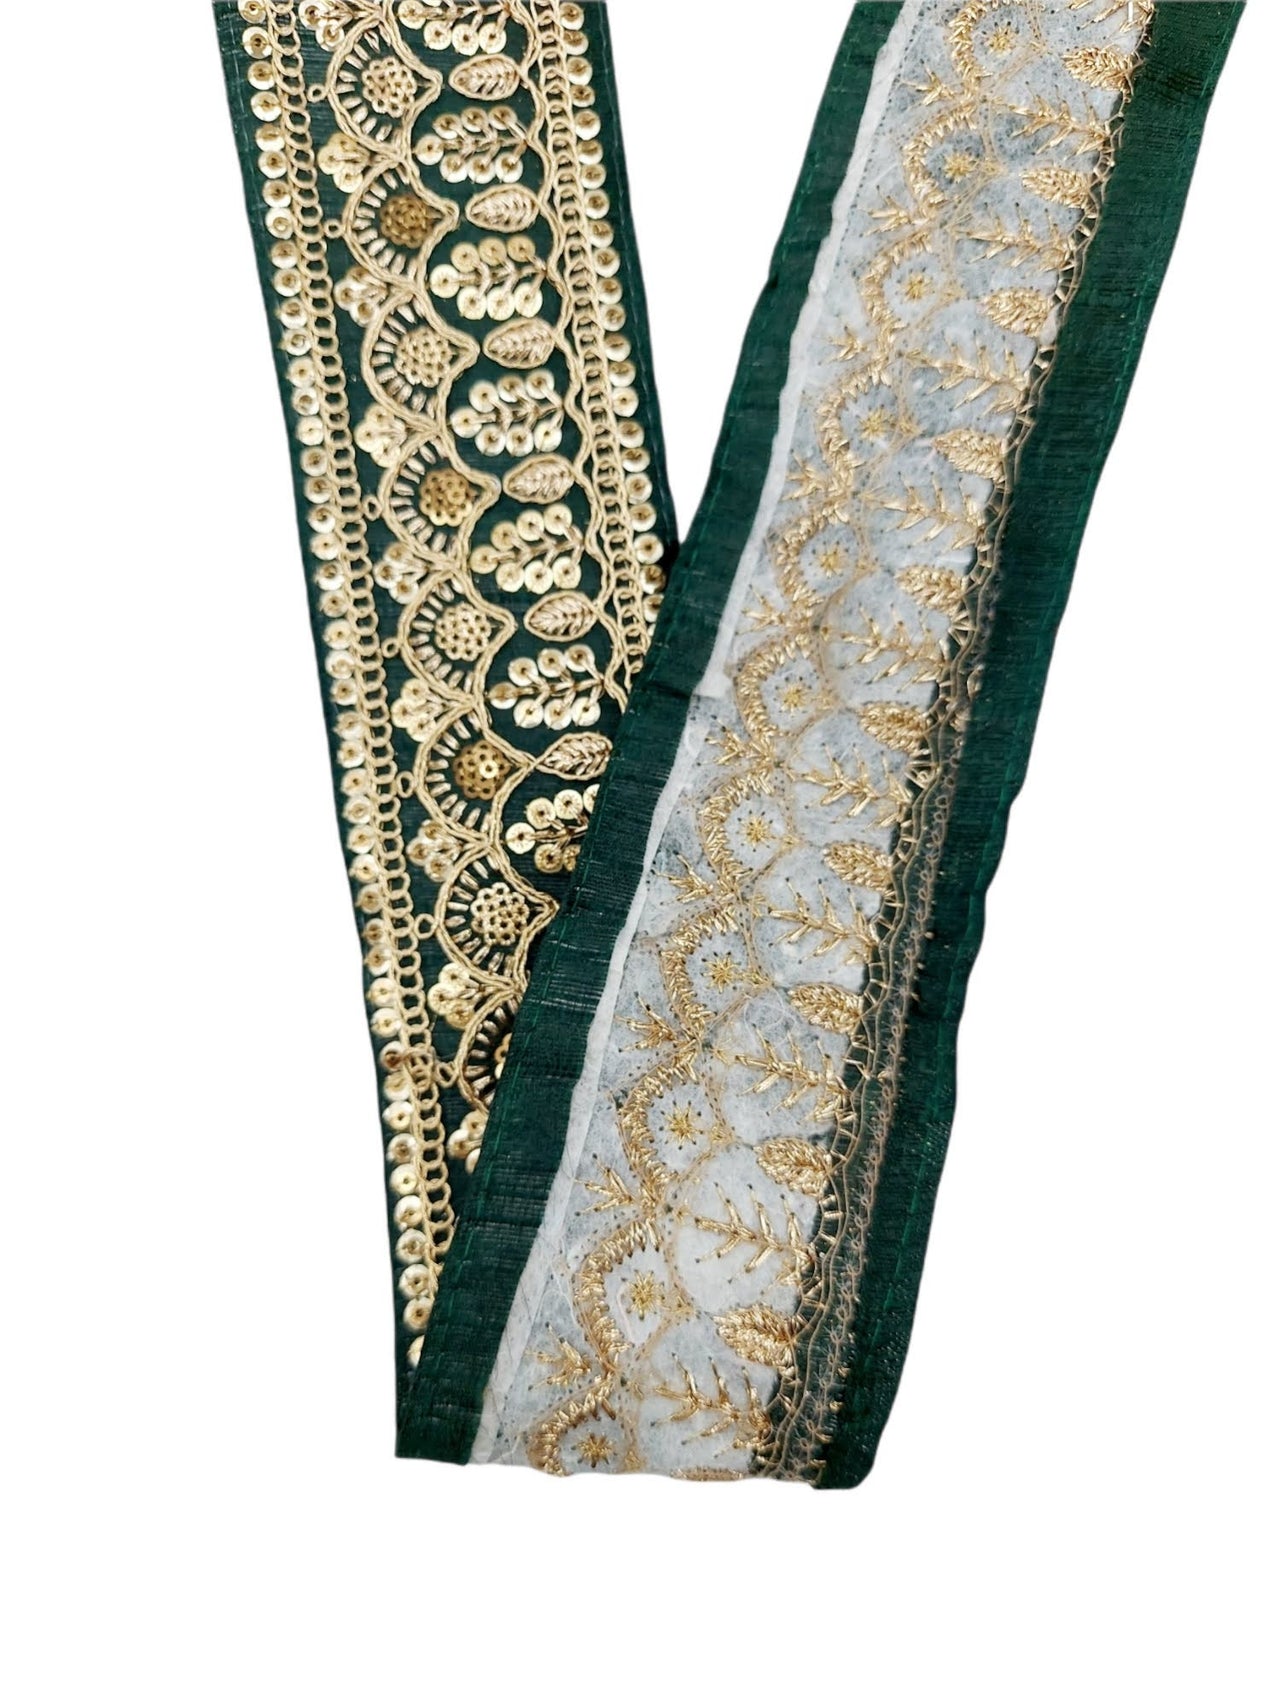 2 Yards, Dark Green Gold Embroidered Lace Trim Sequins Trim Decorative Sari Border Costume Ribbon Crafting Sewing Tape